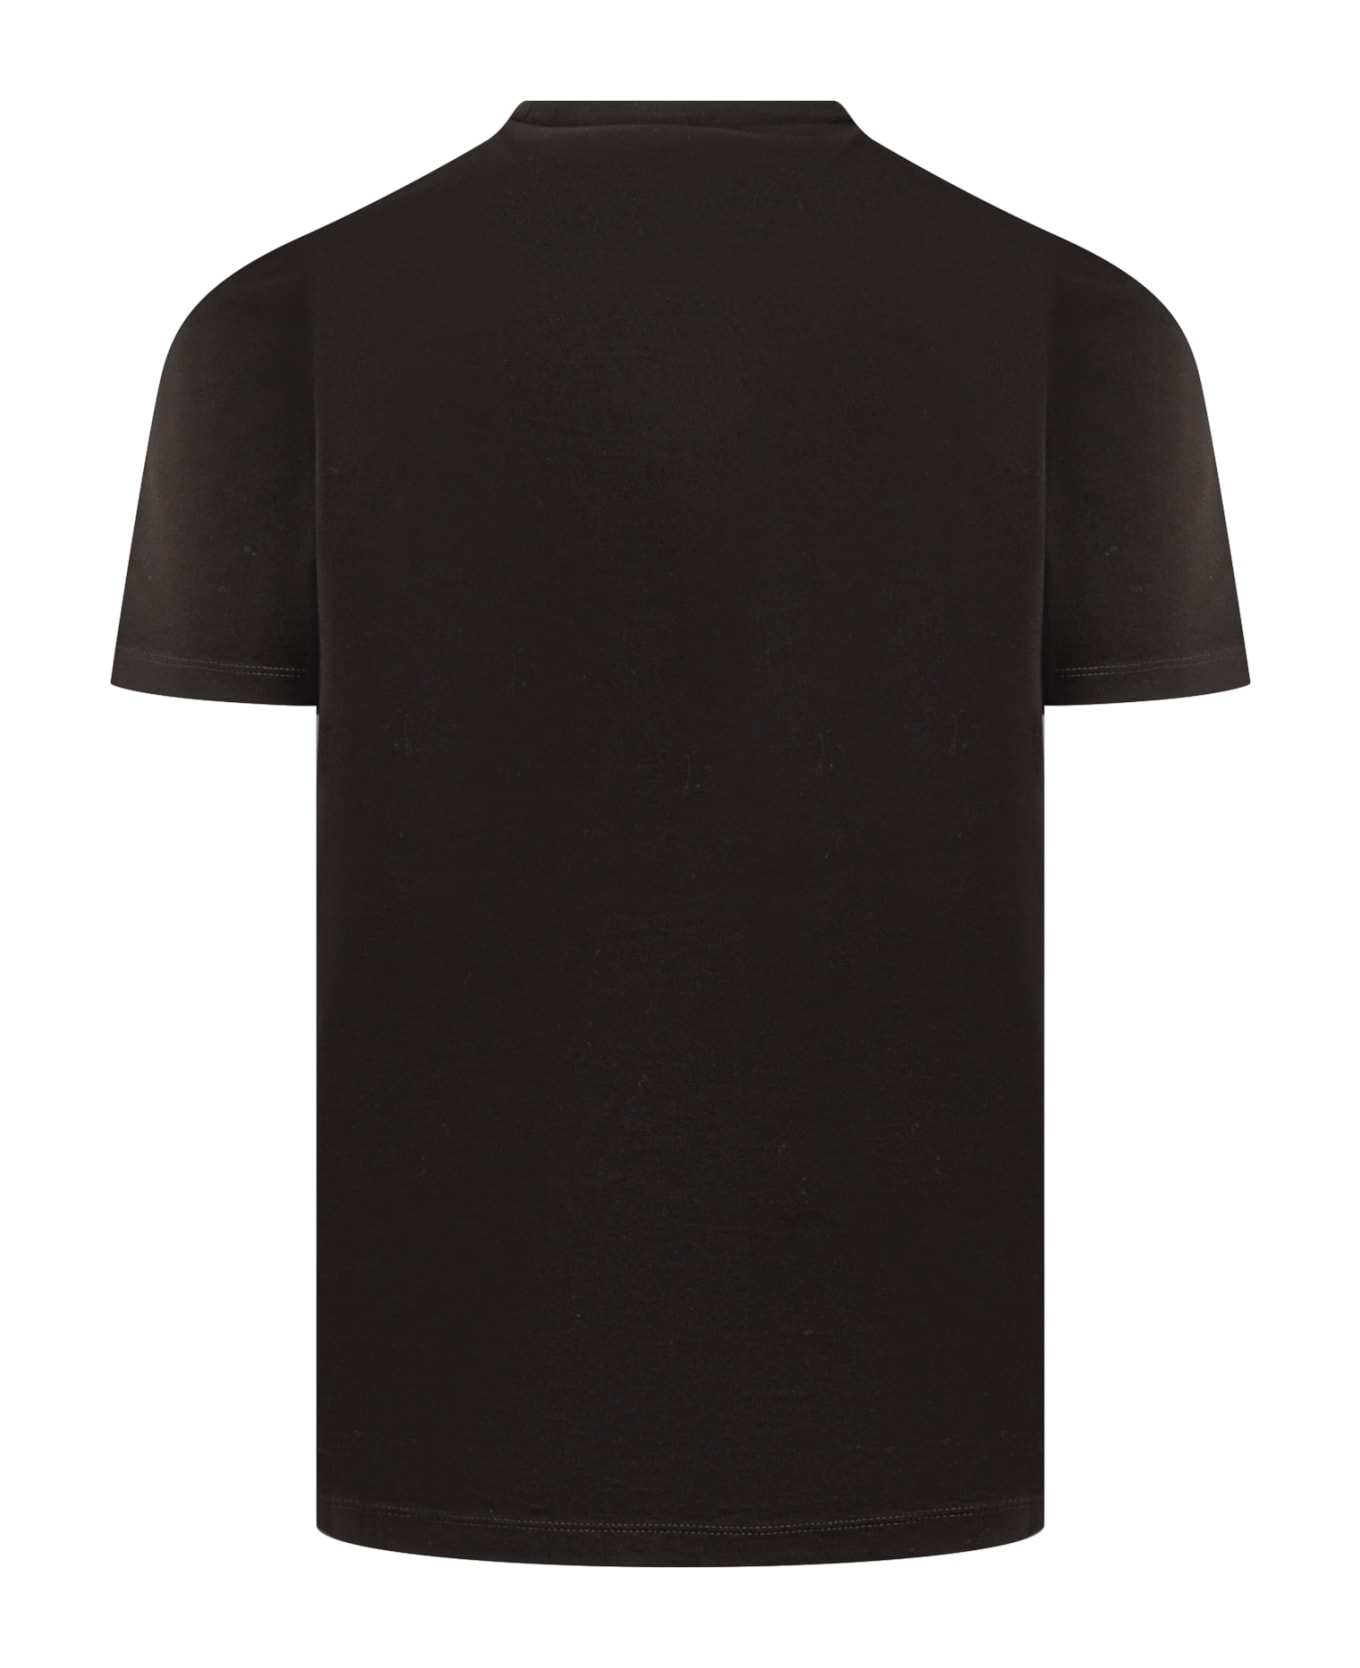 Dsquared2 Icon Blur Cool Fit T-shirt - BLACK